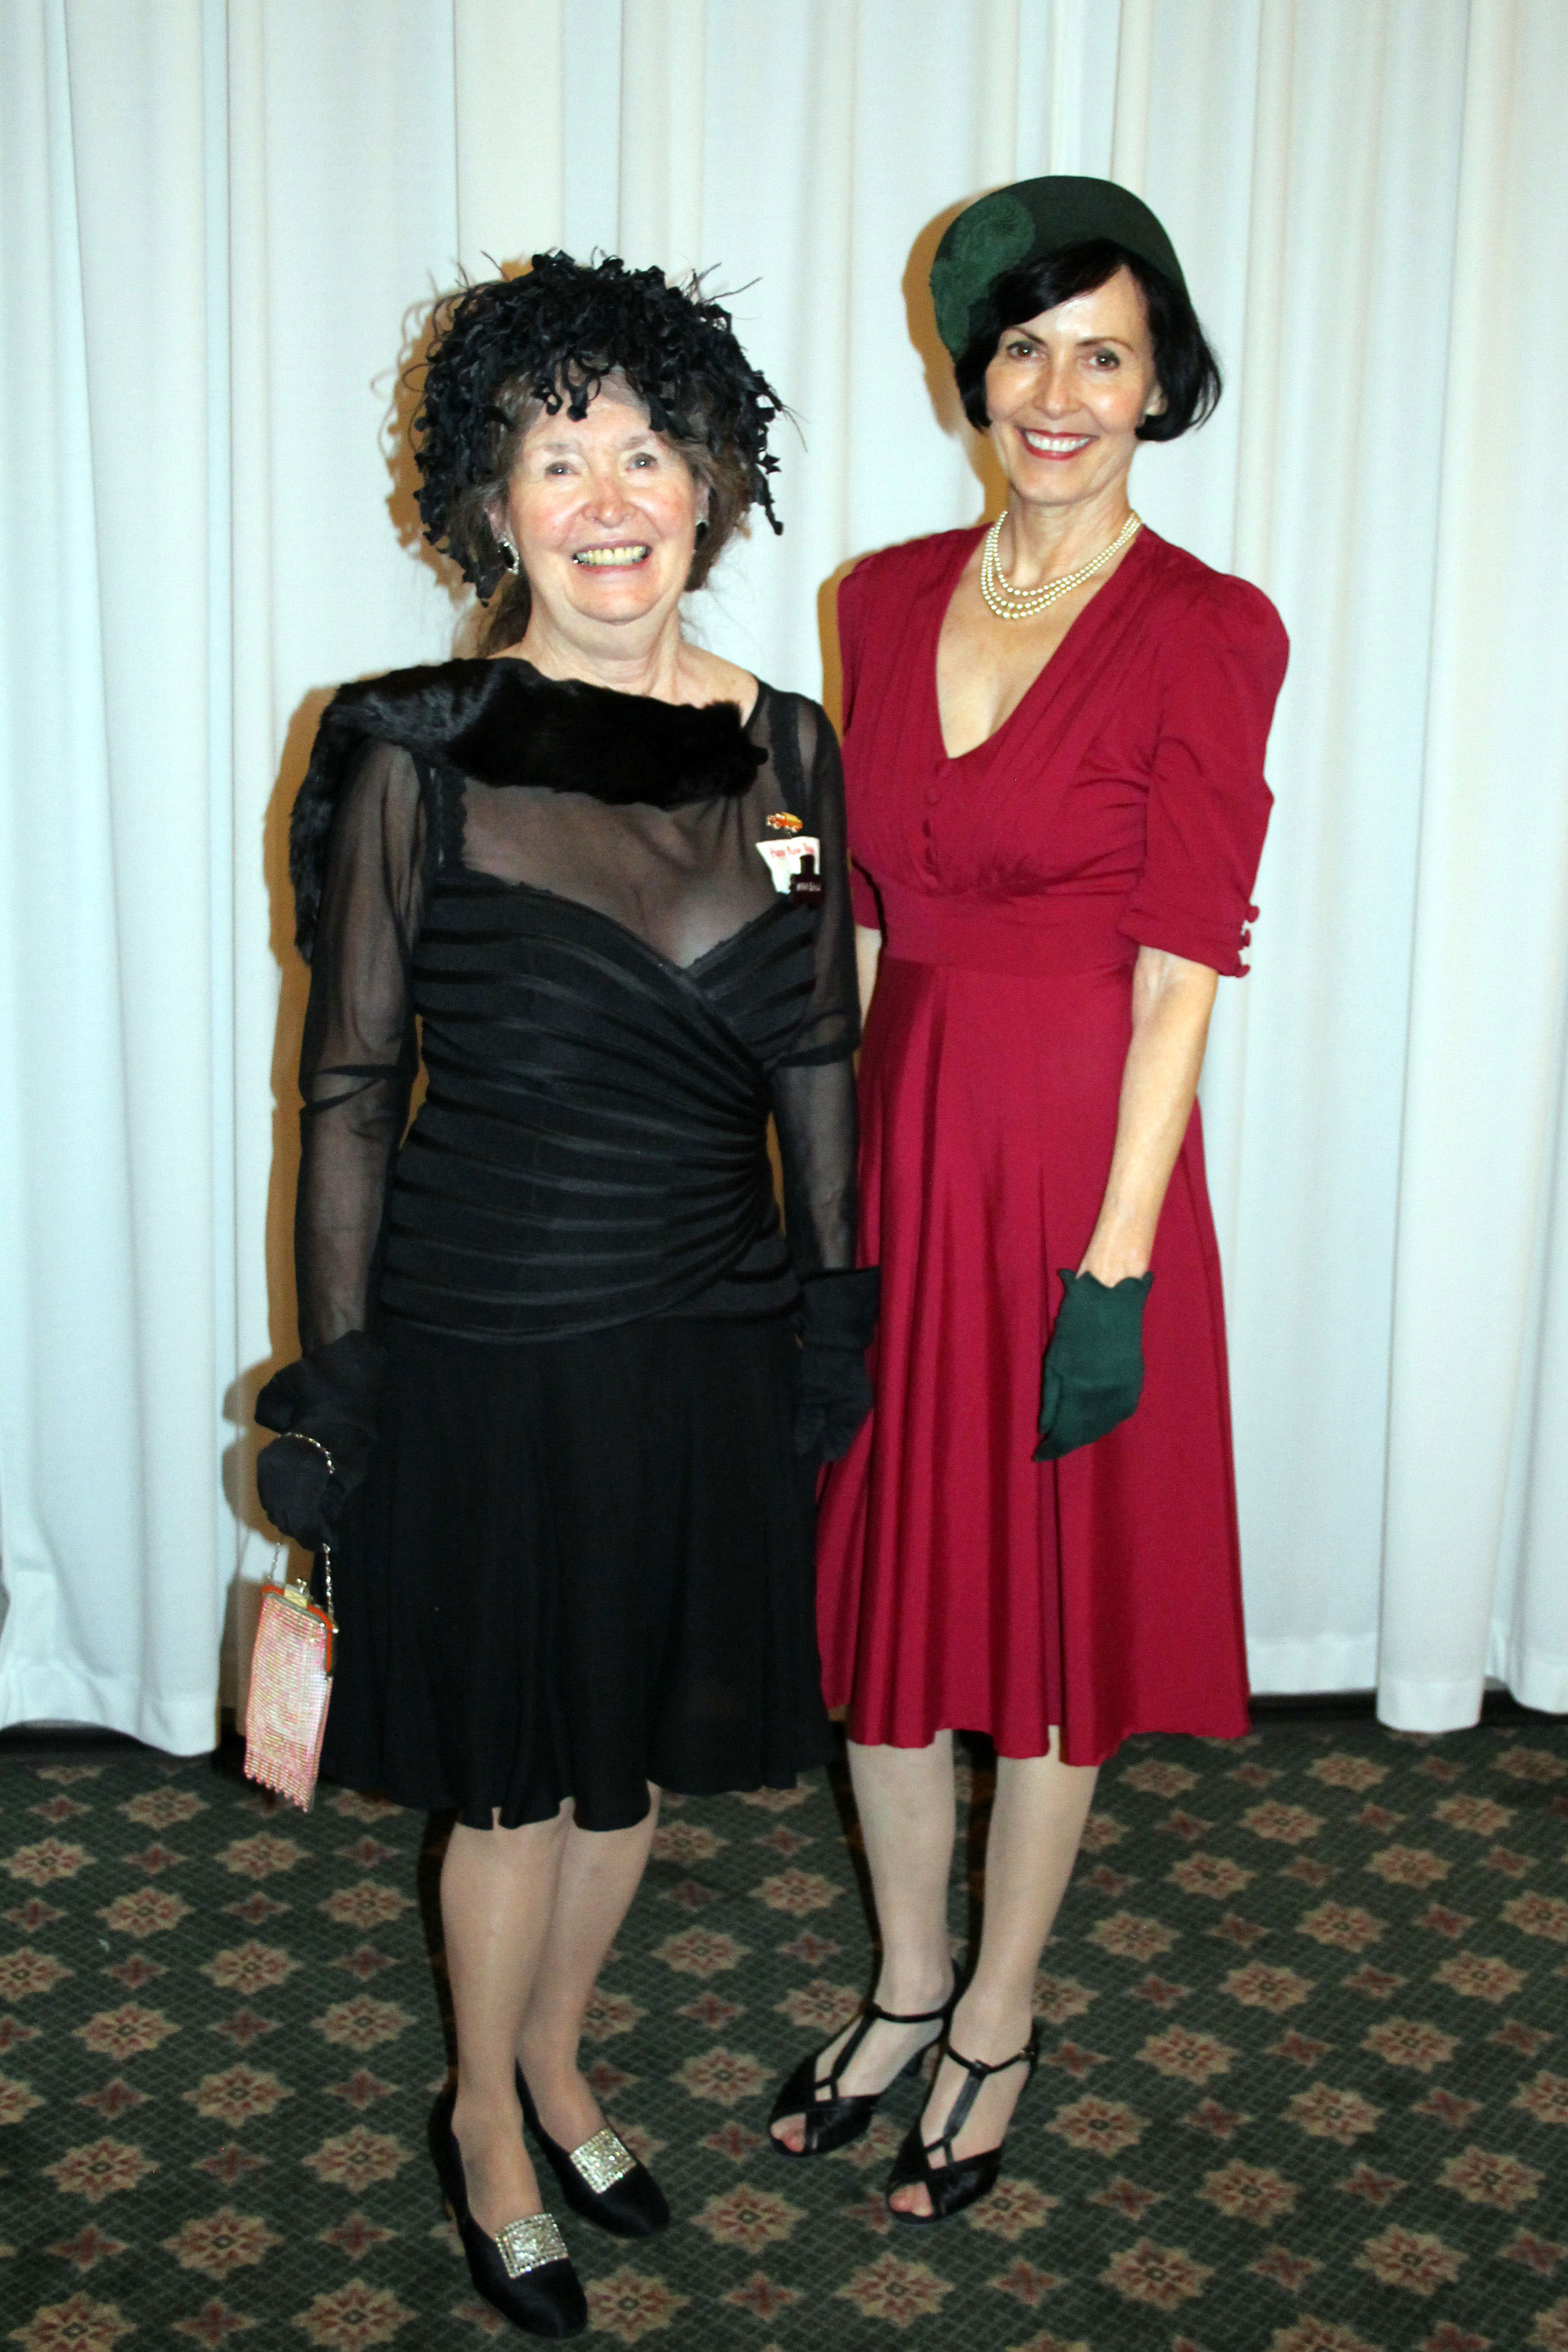   Queens of era fashion - Myrna Schild and Cornelia Manassa  